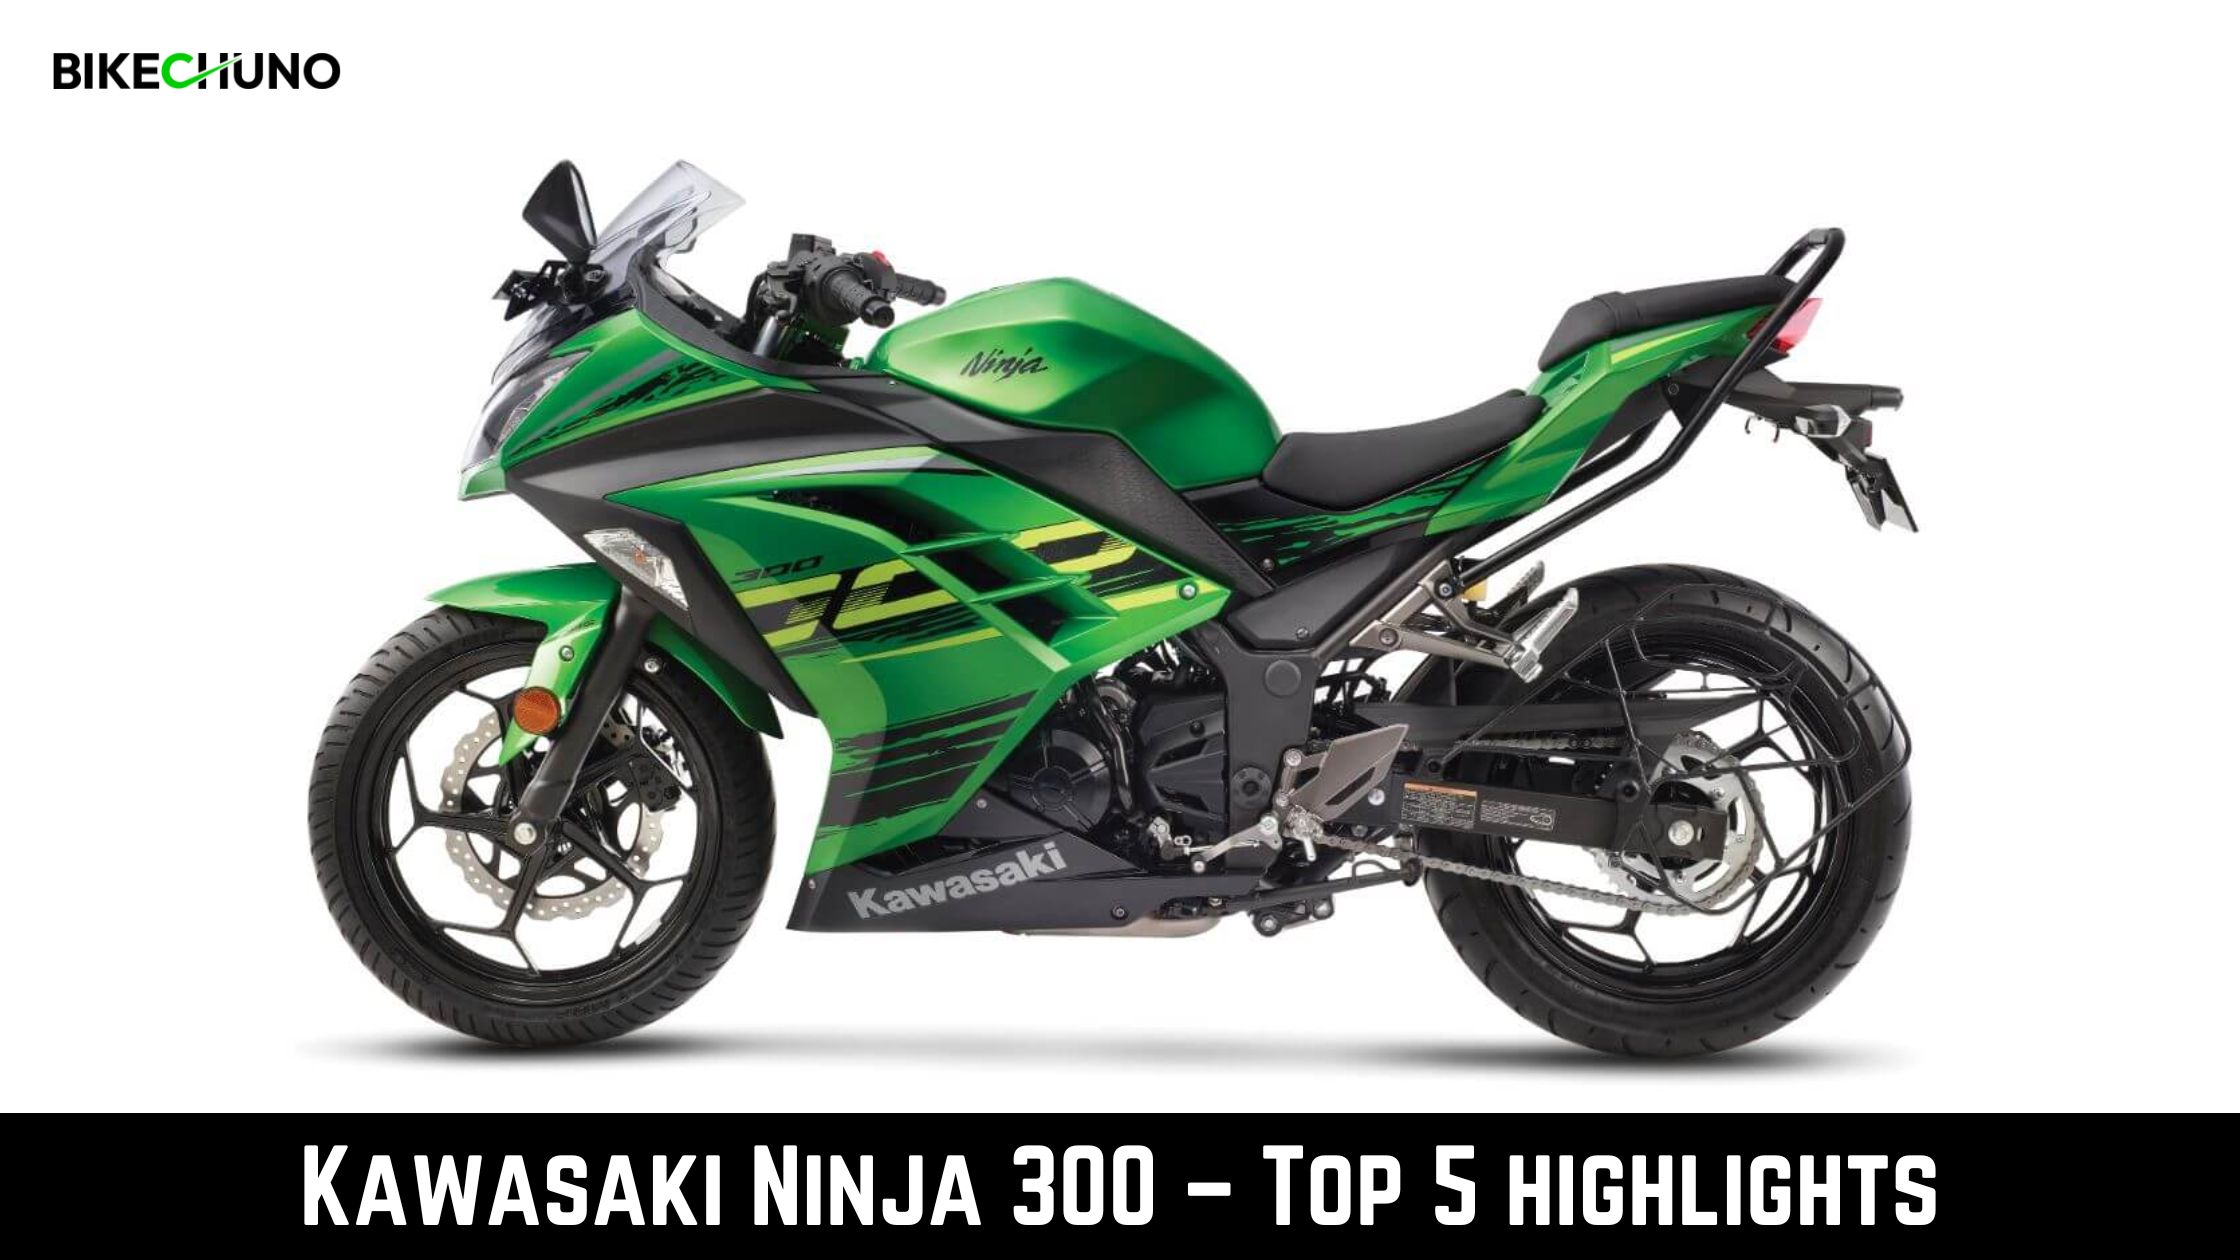 Kawasaki Ninja 300: Top 5 Highlights